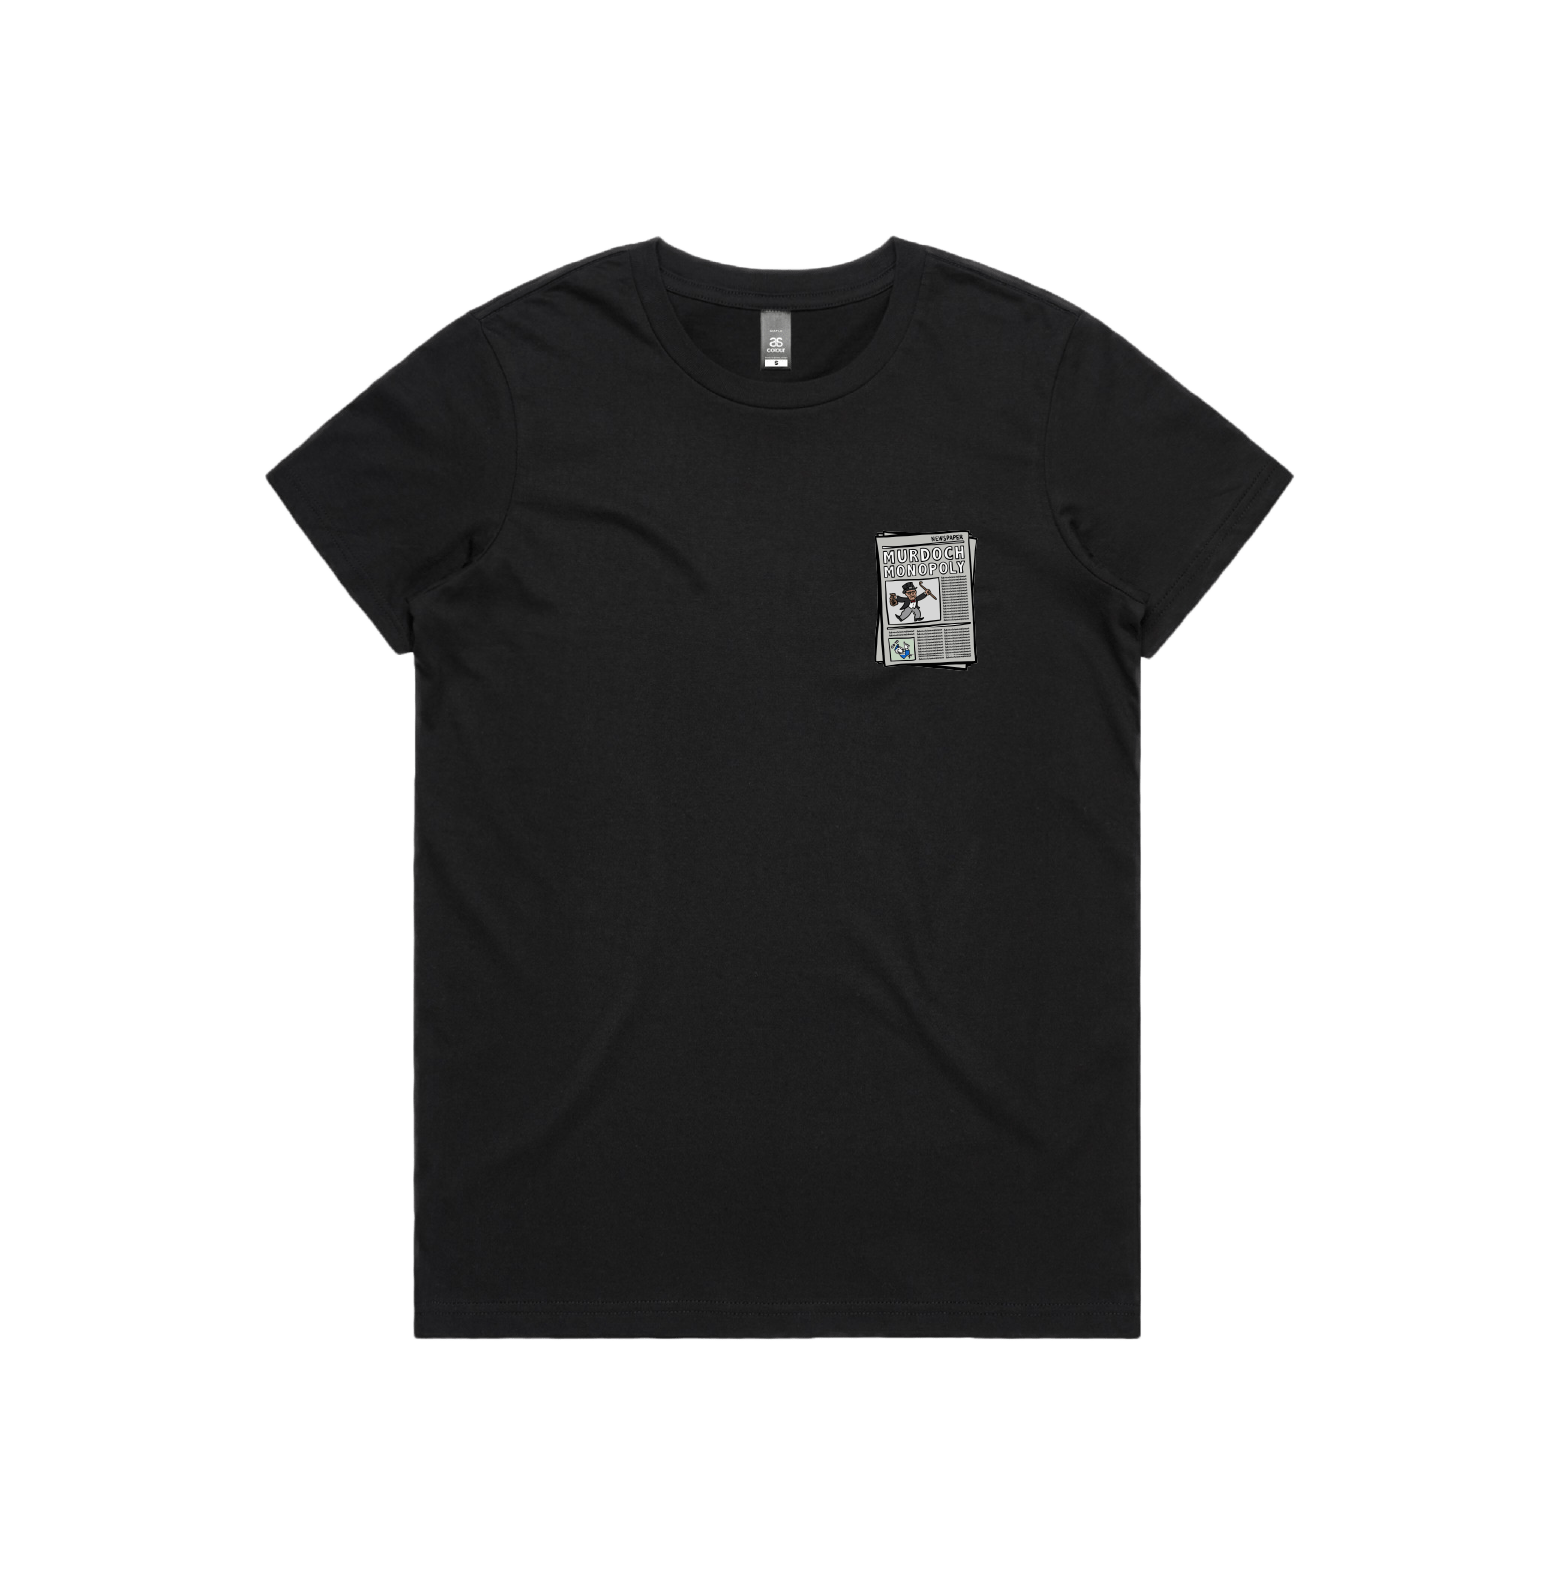 XS / Black / Small Front Design Murdoch Monopoly 📰 - Women's T Shirt